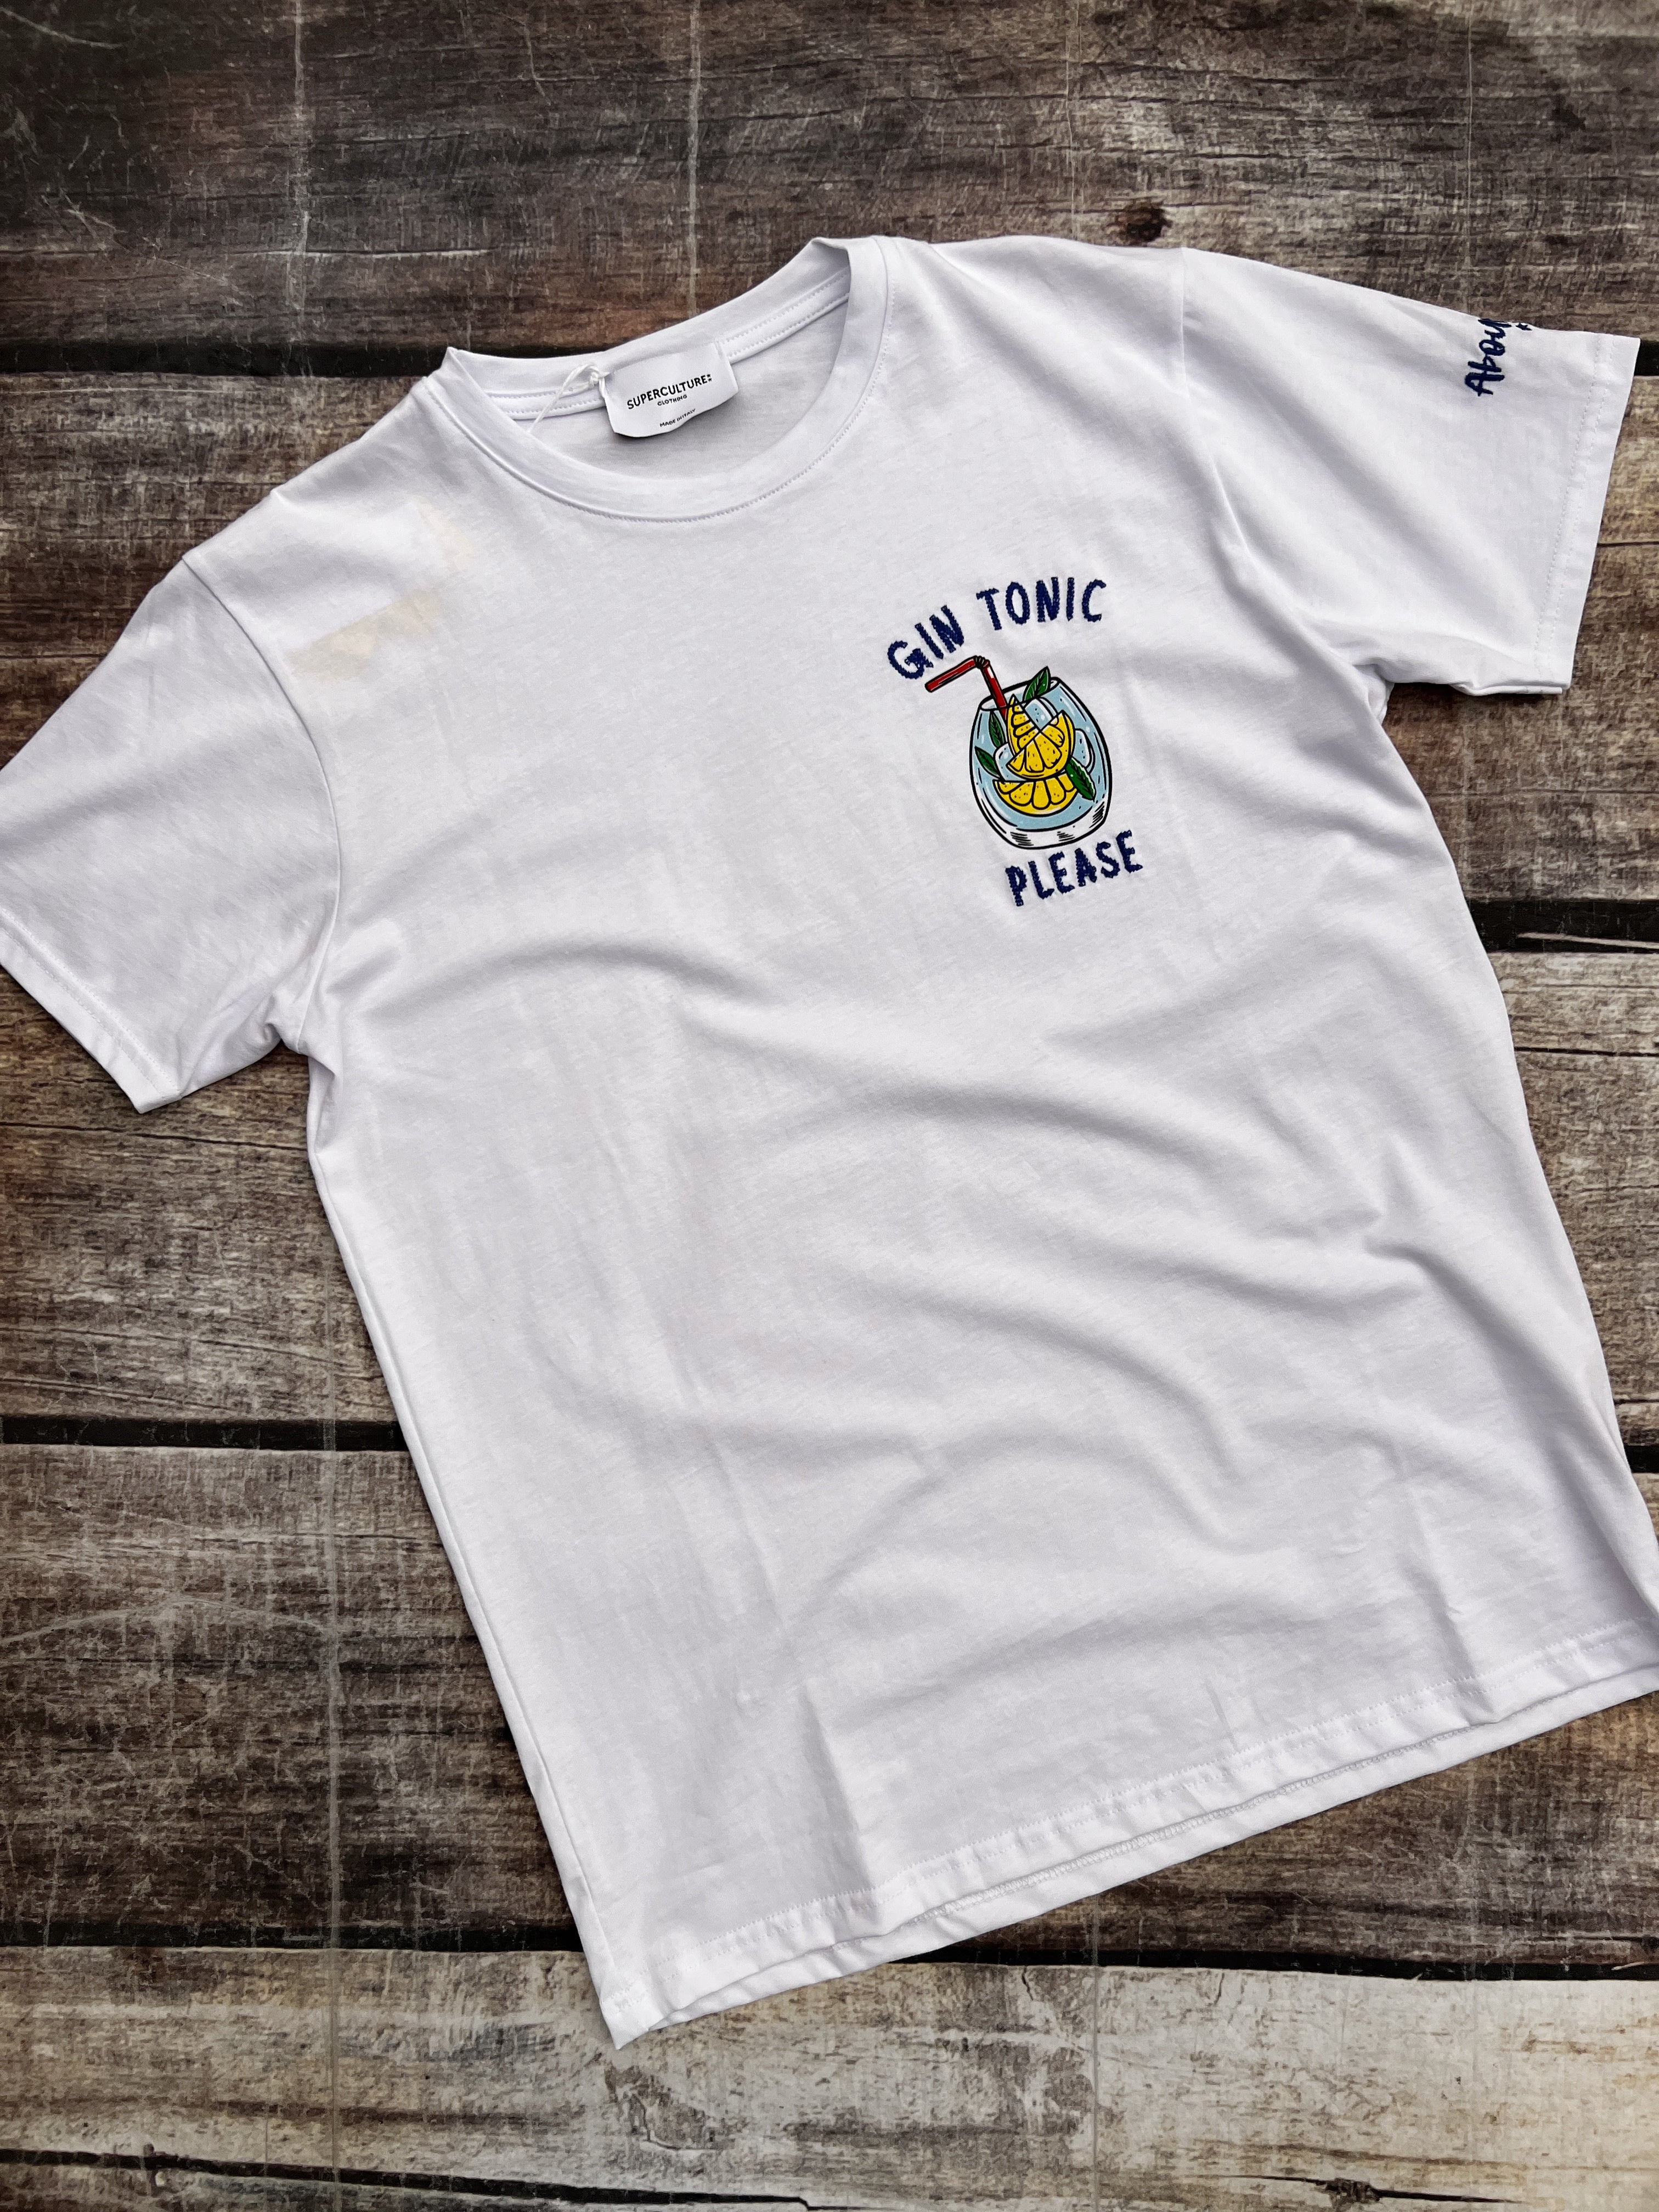 T-shirt Superculture GinTonic Please A851 (8864362529108)